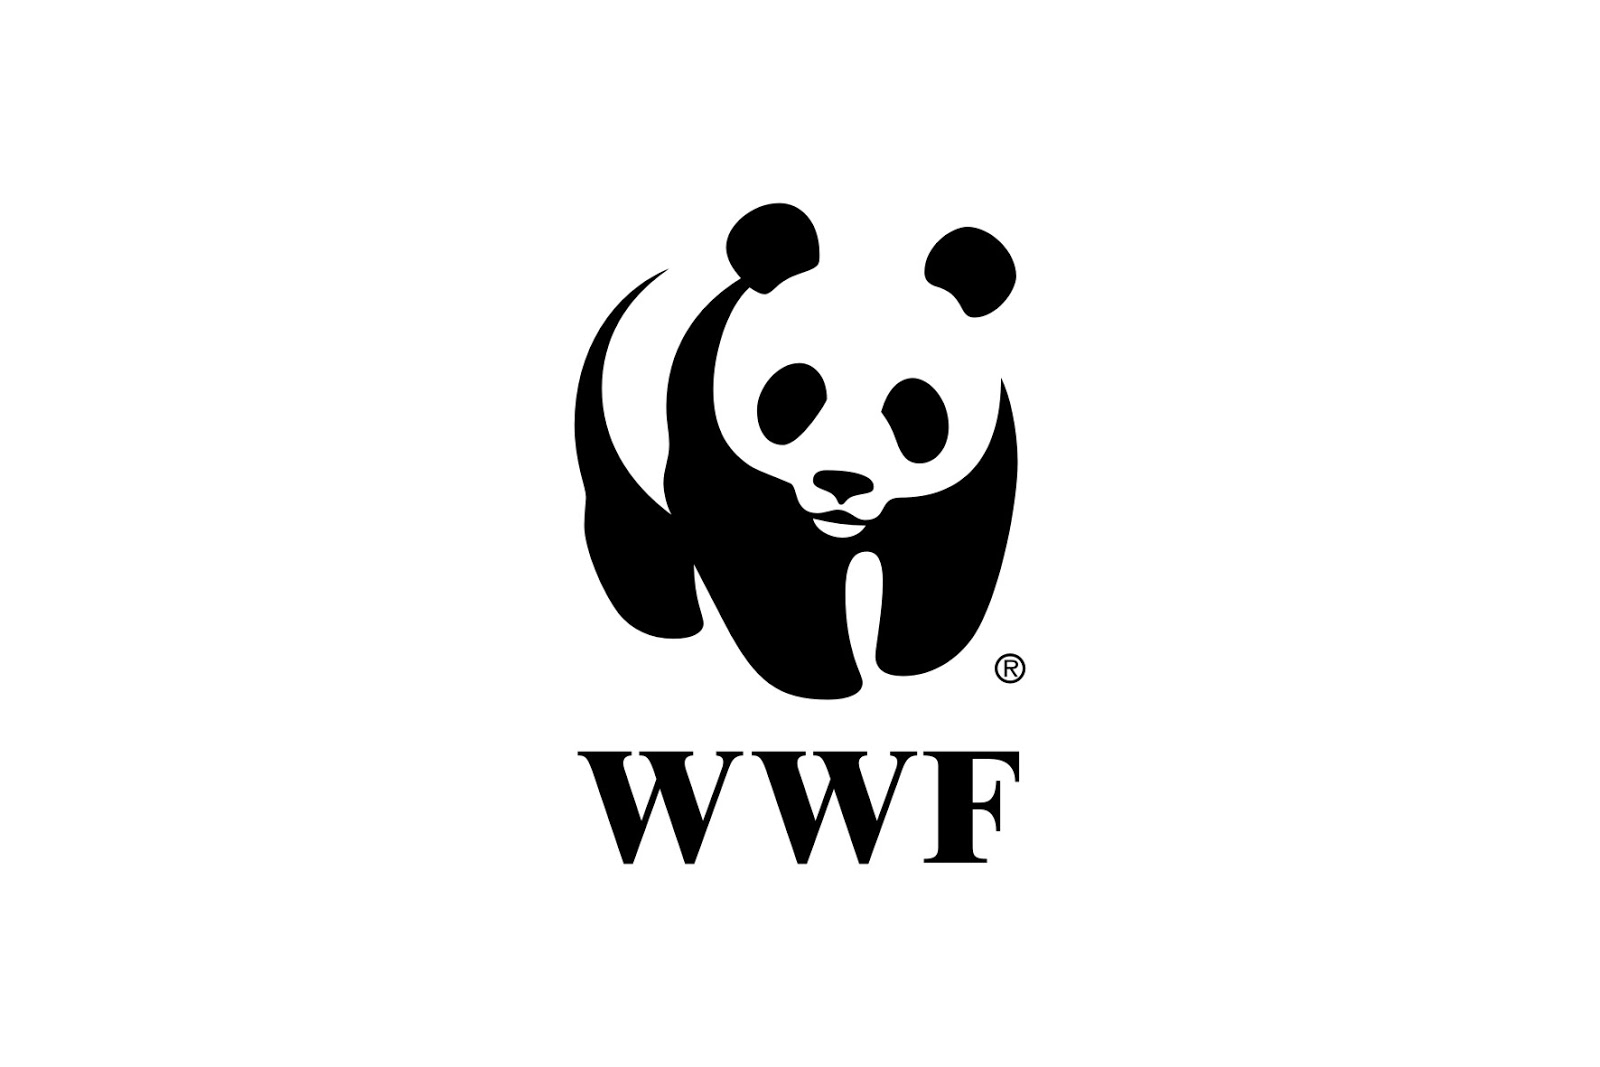 More information about "WWF: Οδηγός διευκόλυνσης της συμμετοχή των πολιτών στον αγώνα για προστασία του περιβάλλοντος"